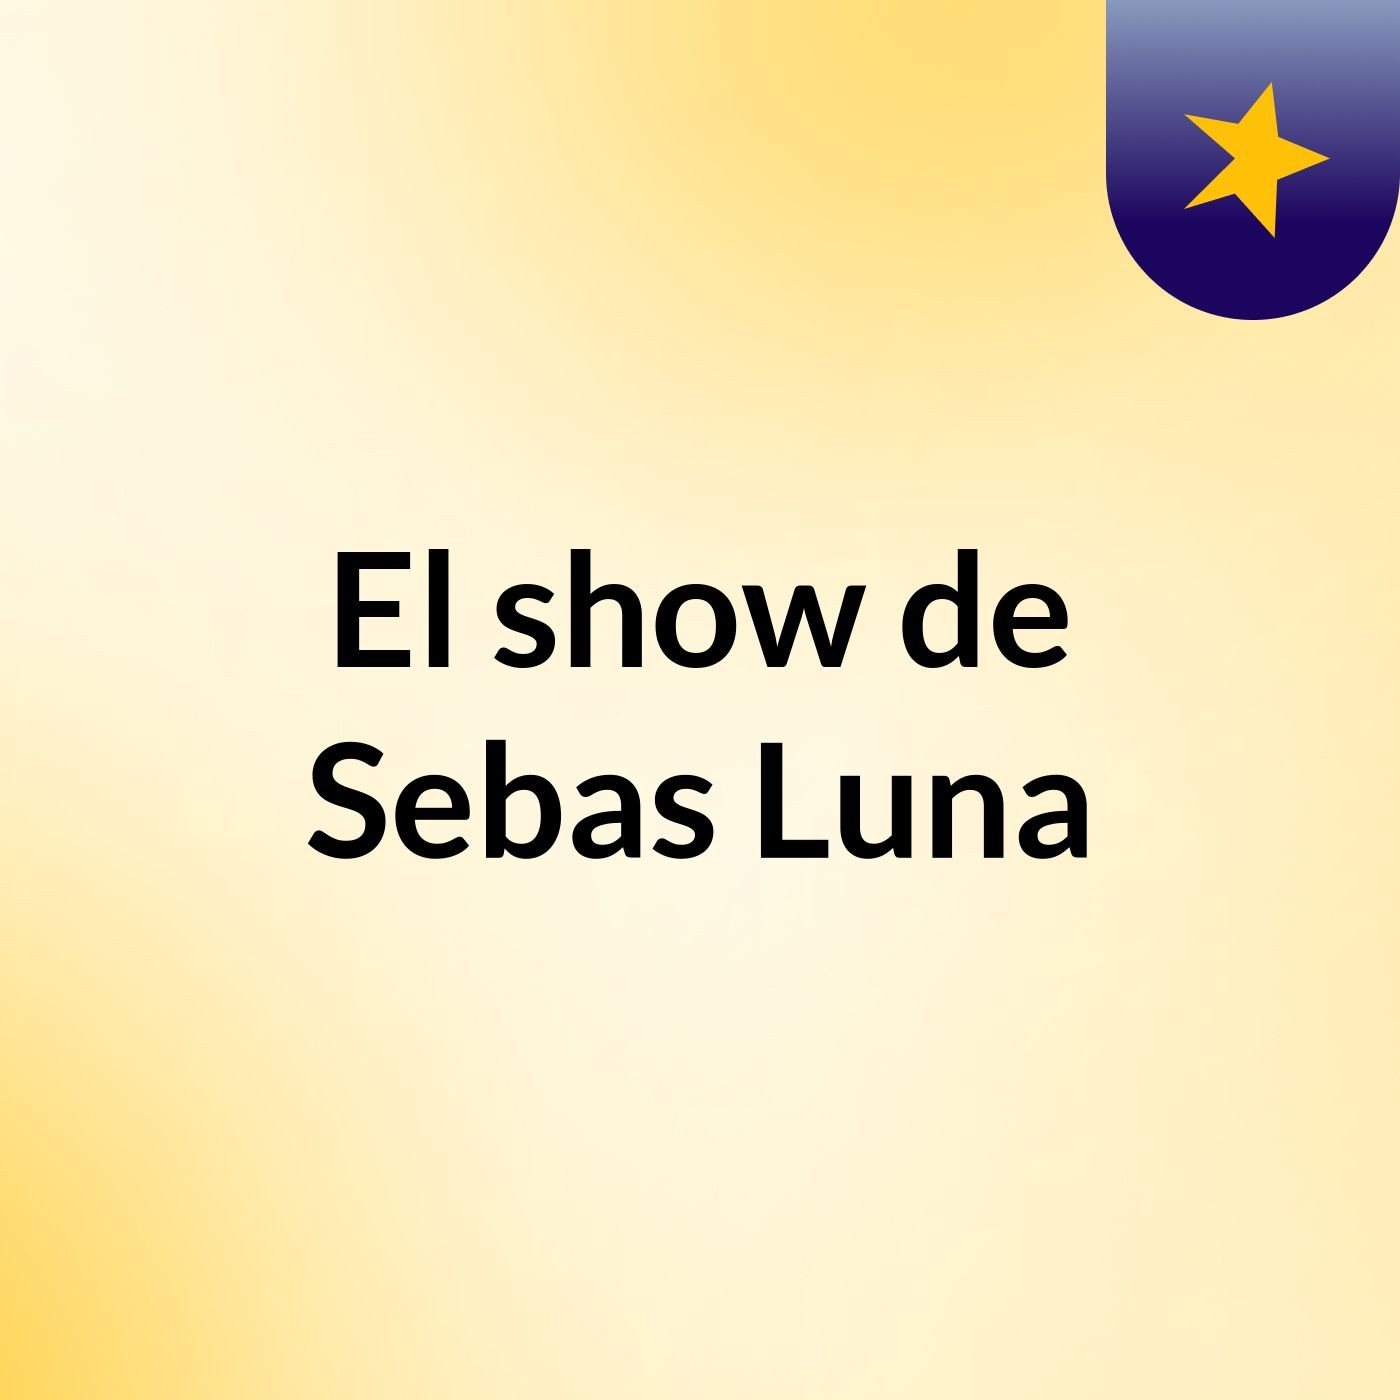 El show de Sebas Luna